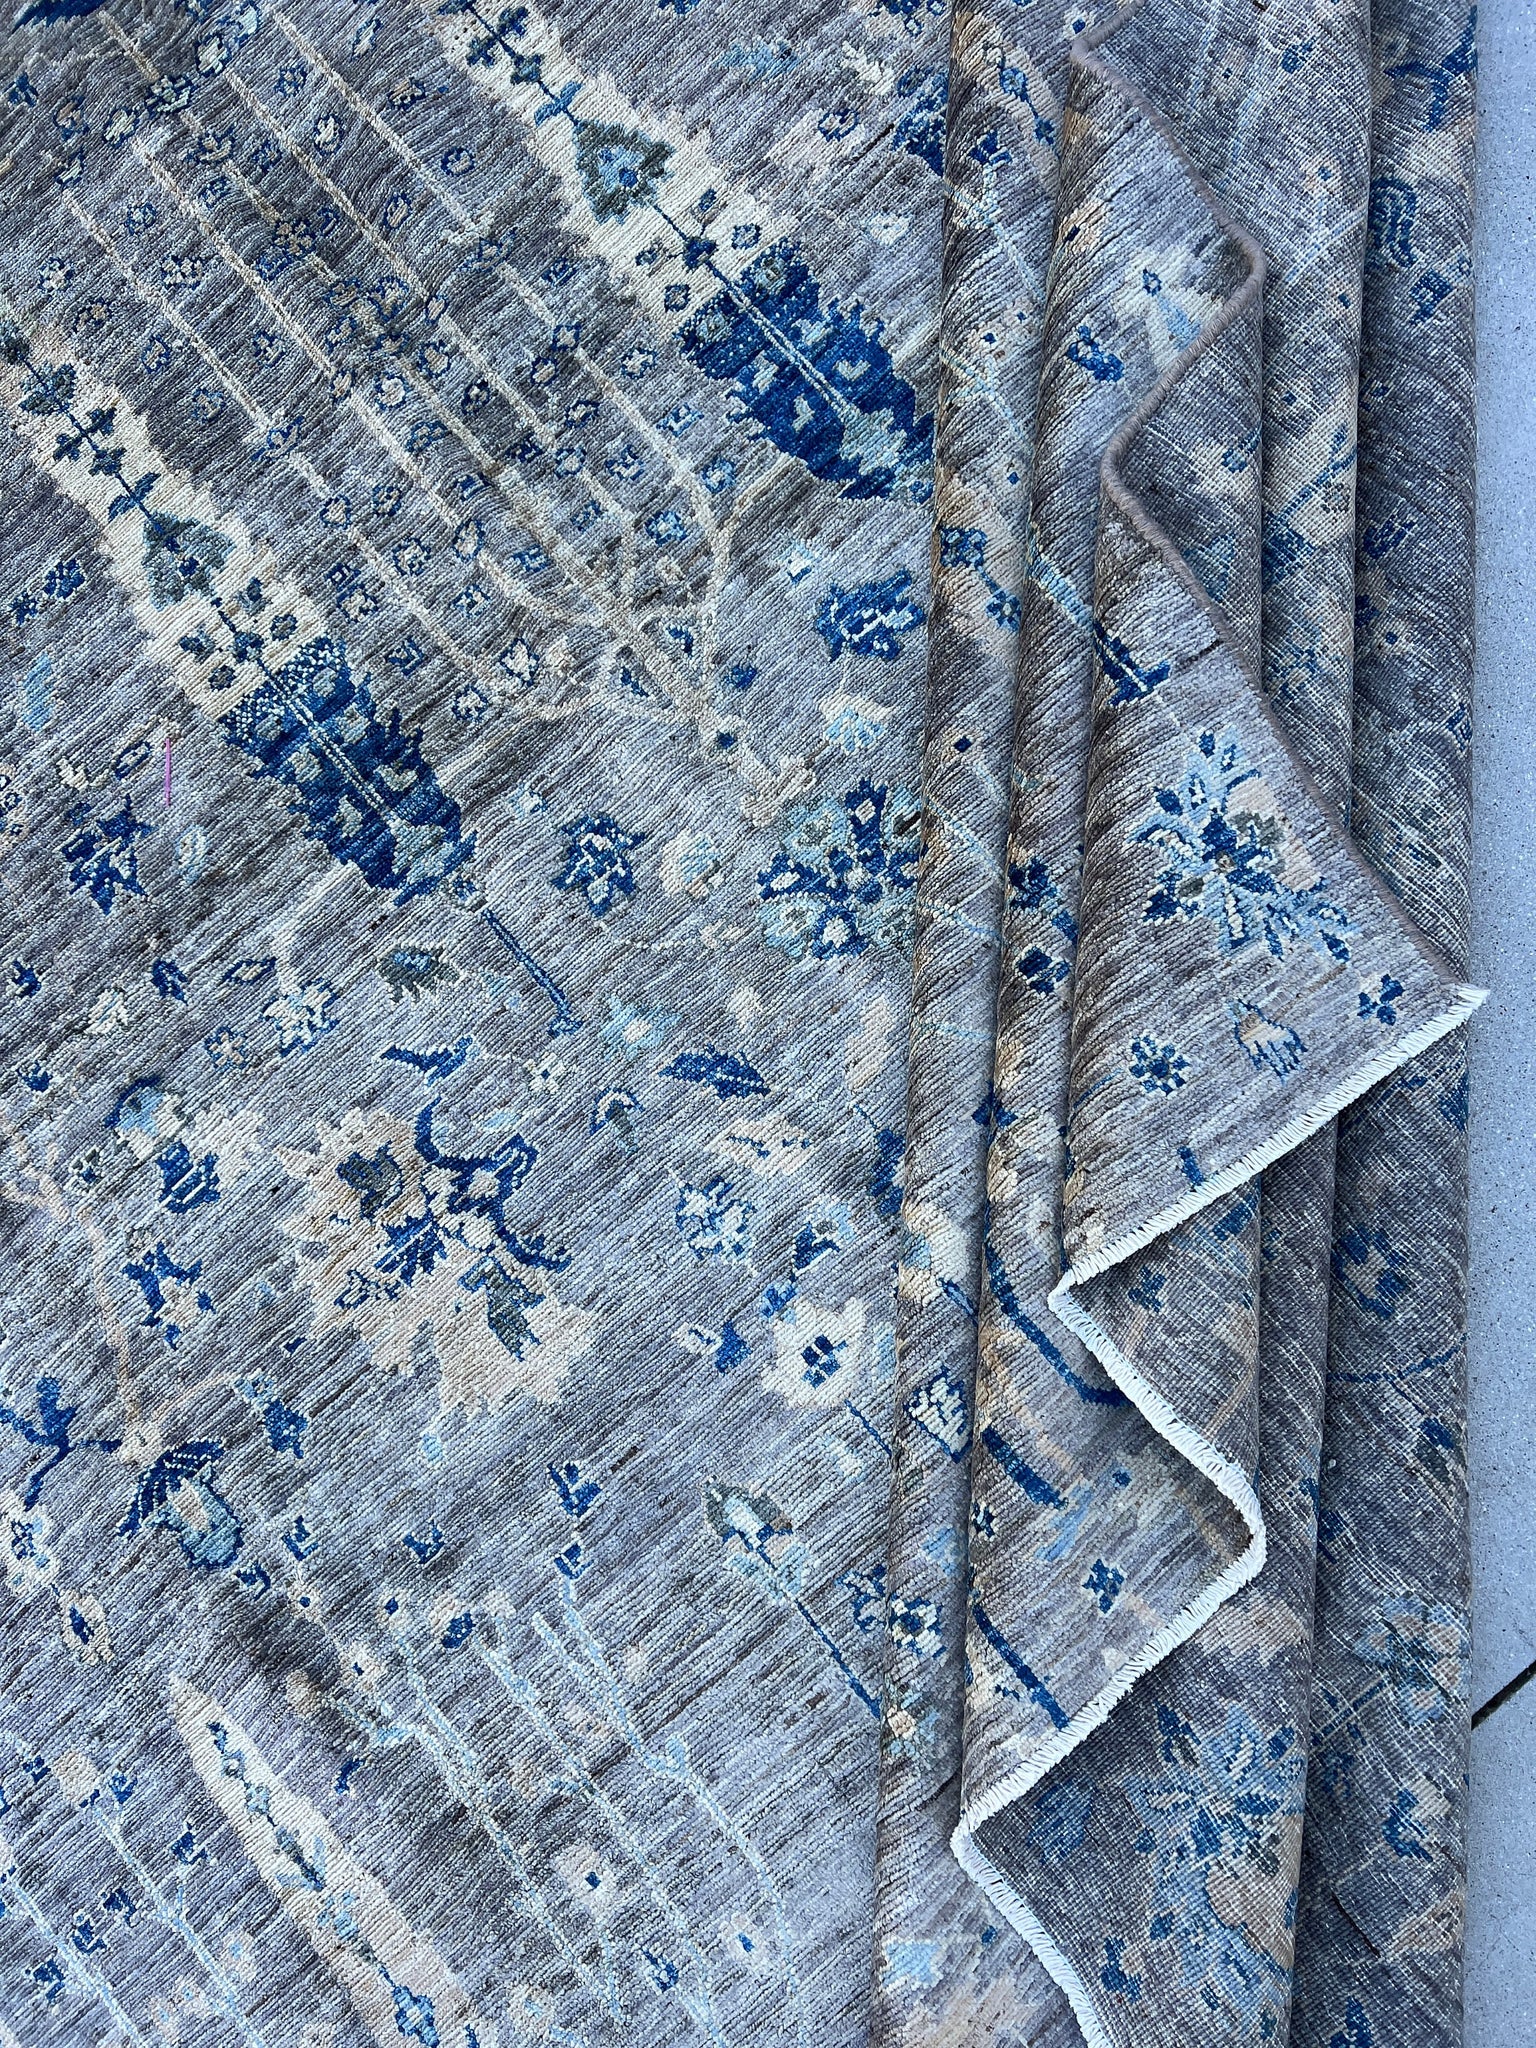 9x12 Handmade Afghan Rug | Free Rug Pad | Neutral Grey Gray Blue Beige | Tribal Floral Wool Boho Hand Knotted Bohemian Persian Oriental